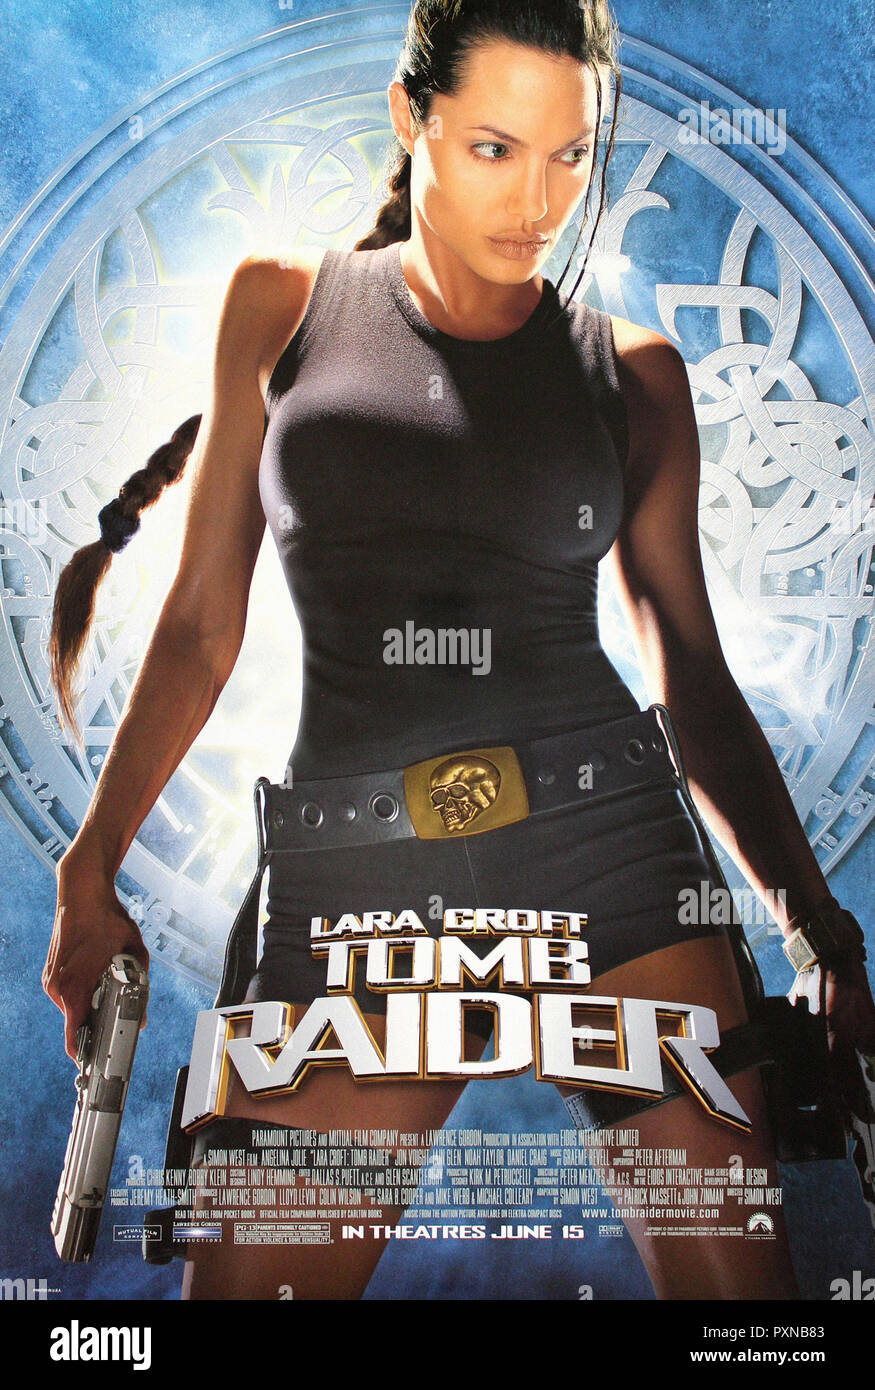 tomb raider movie length